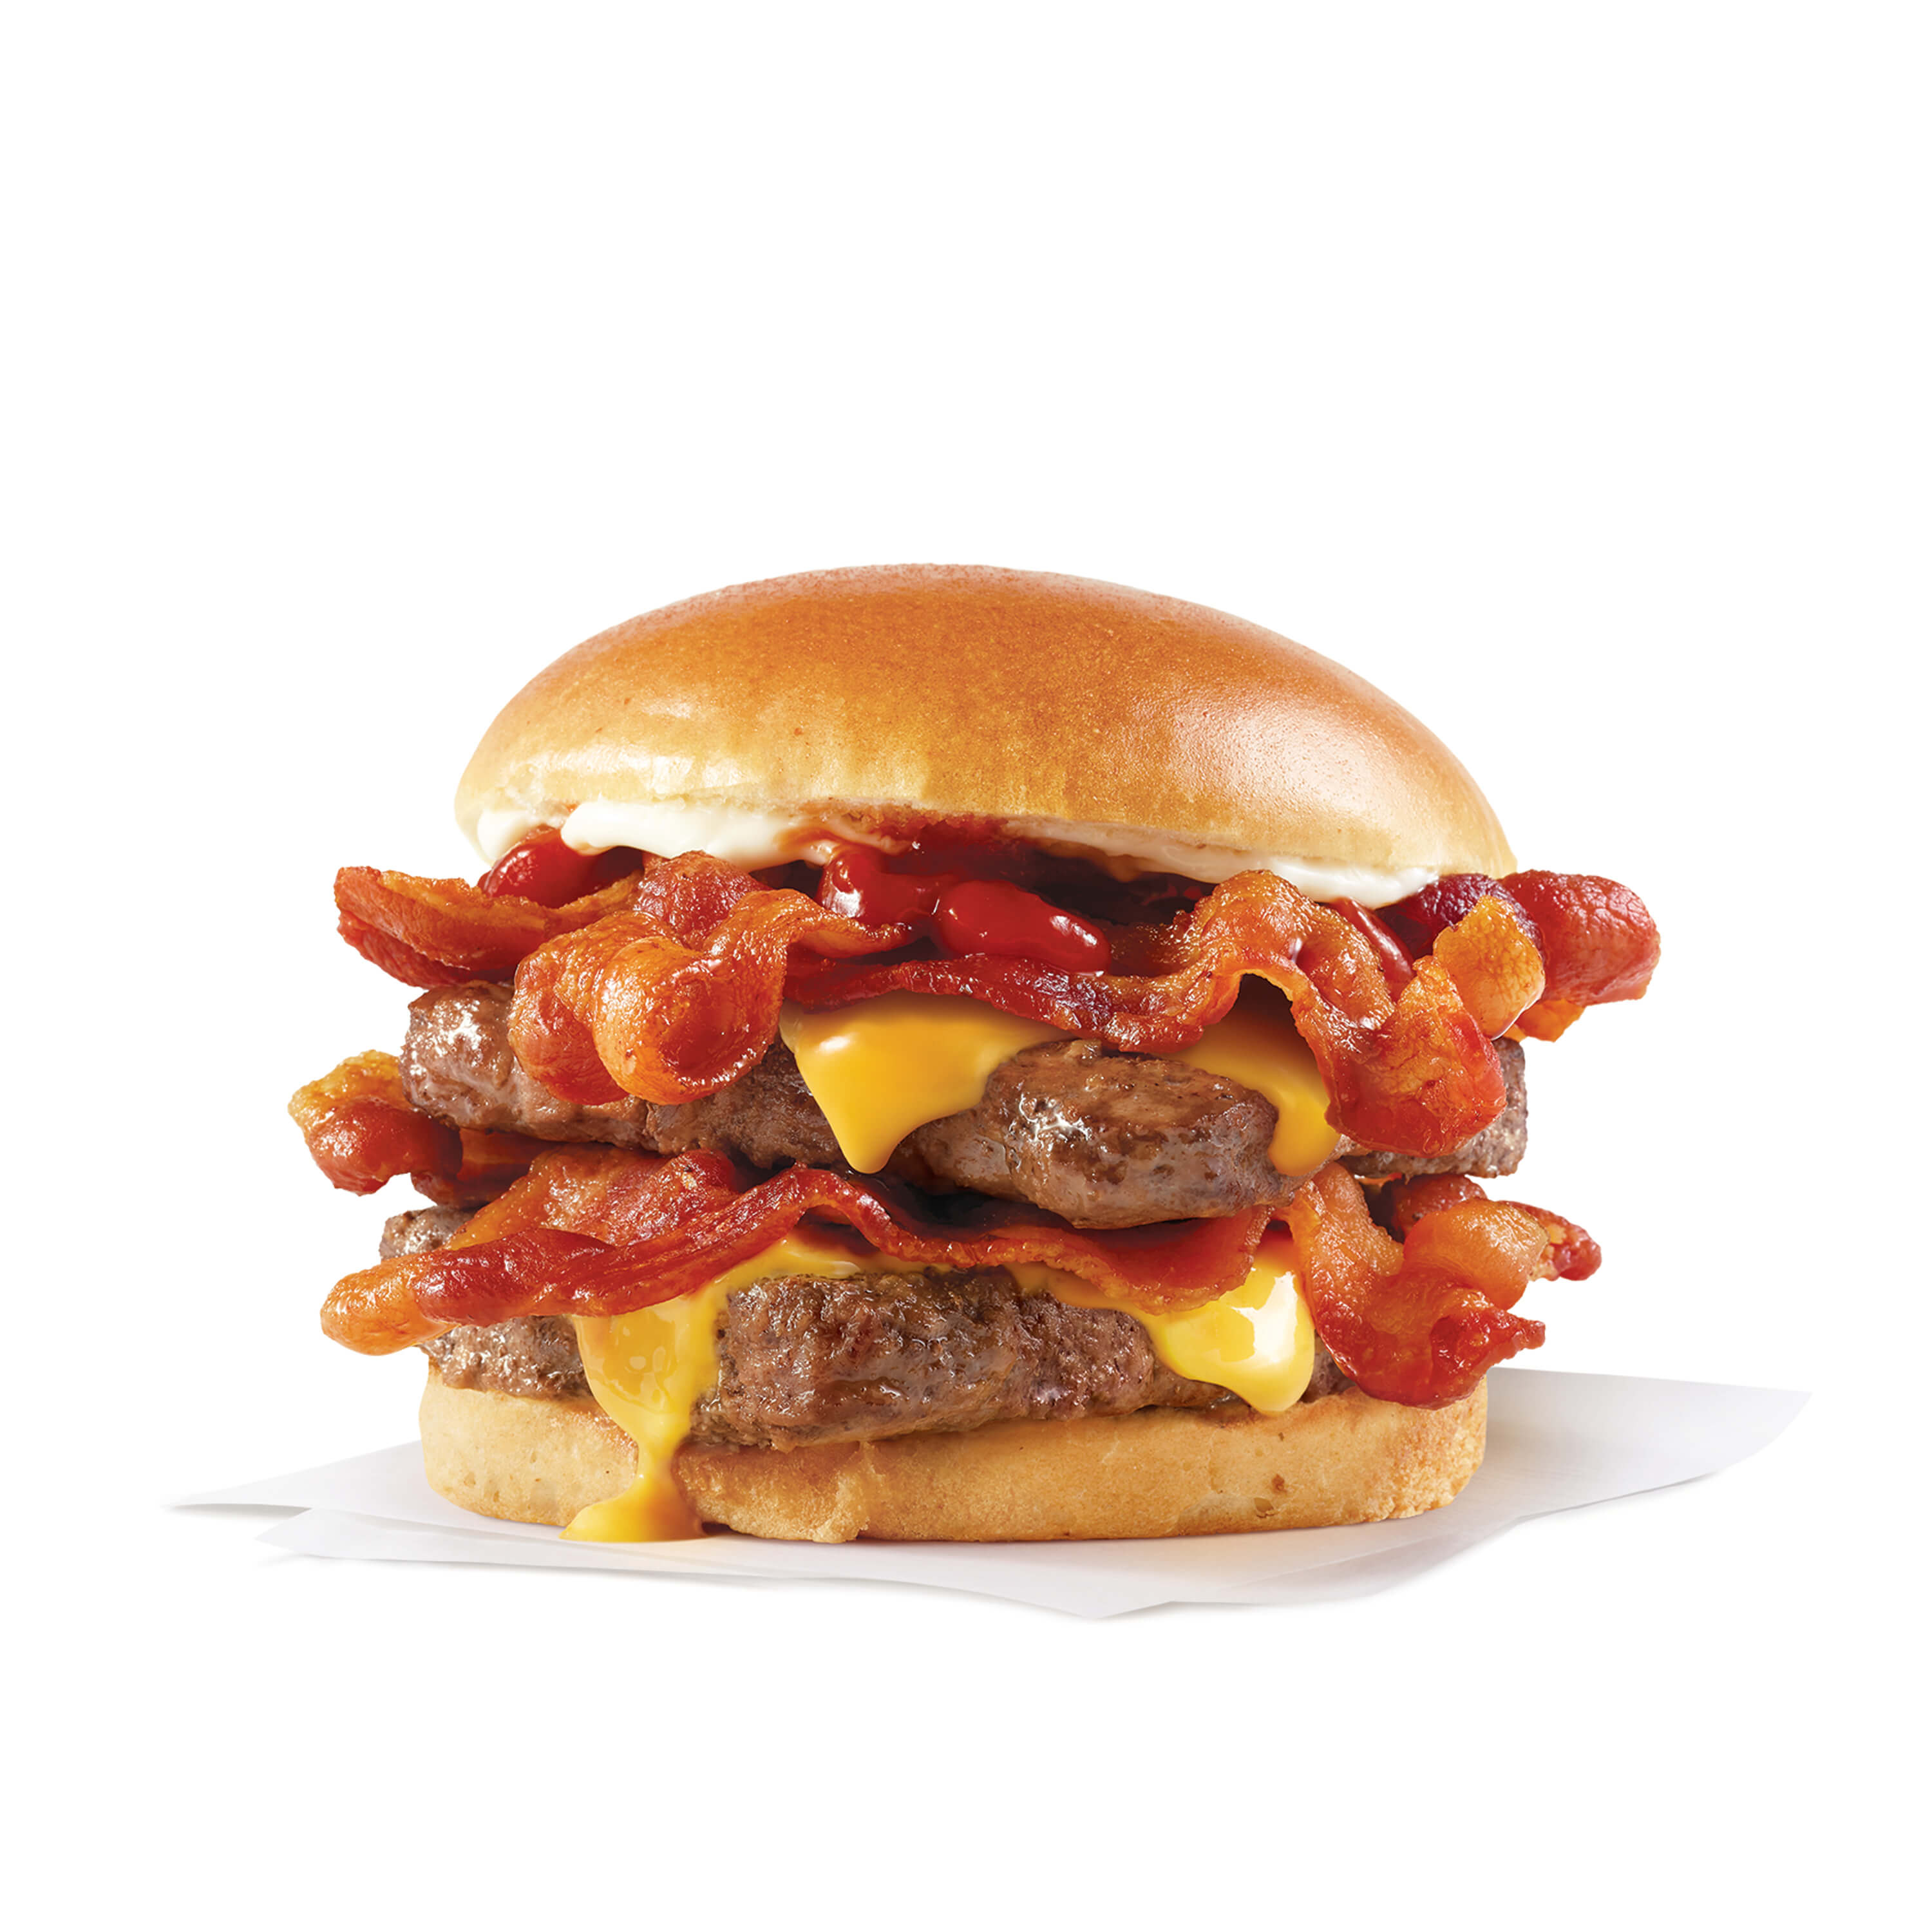 Wendys Launches Baconator LTO Following McDonalds Bacon Hour Announcement